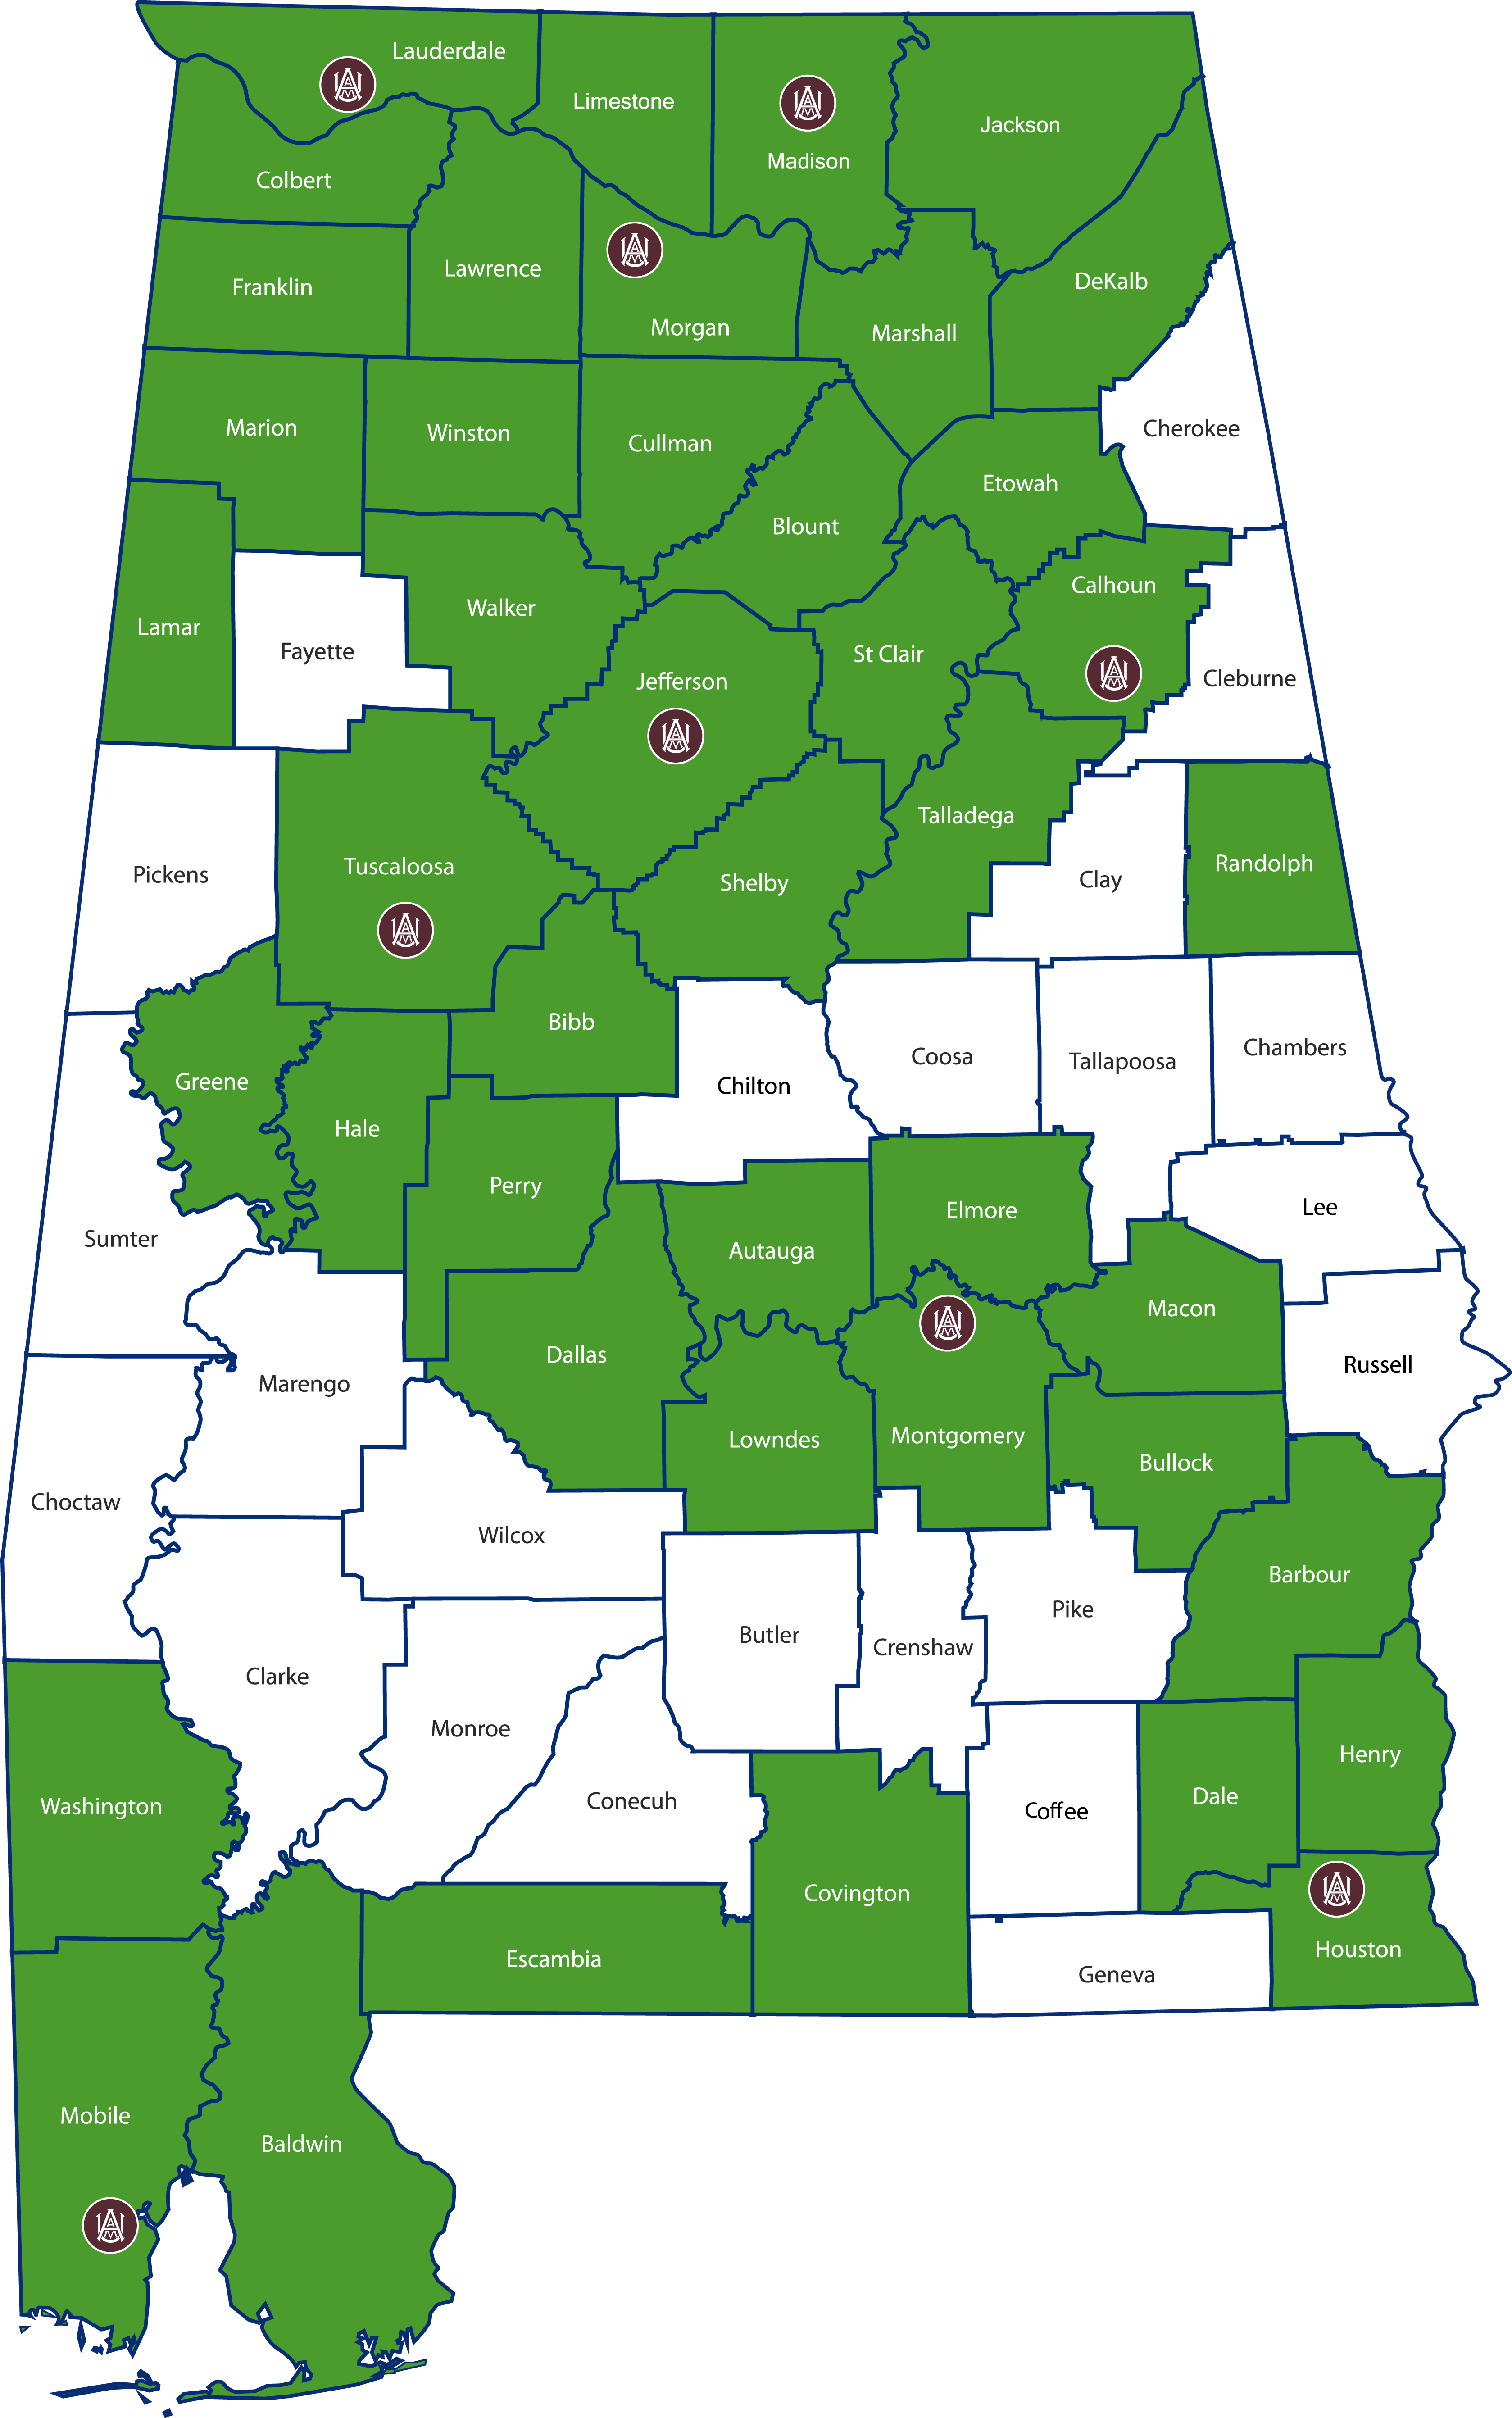 Map of Alabama with nine Urban centers identified